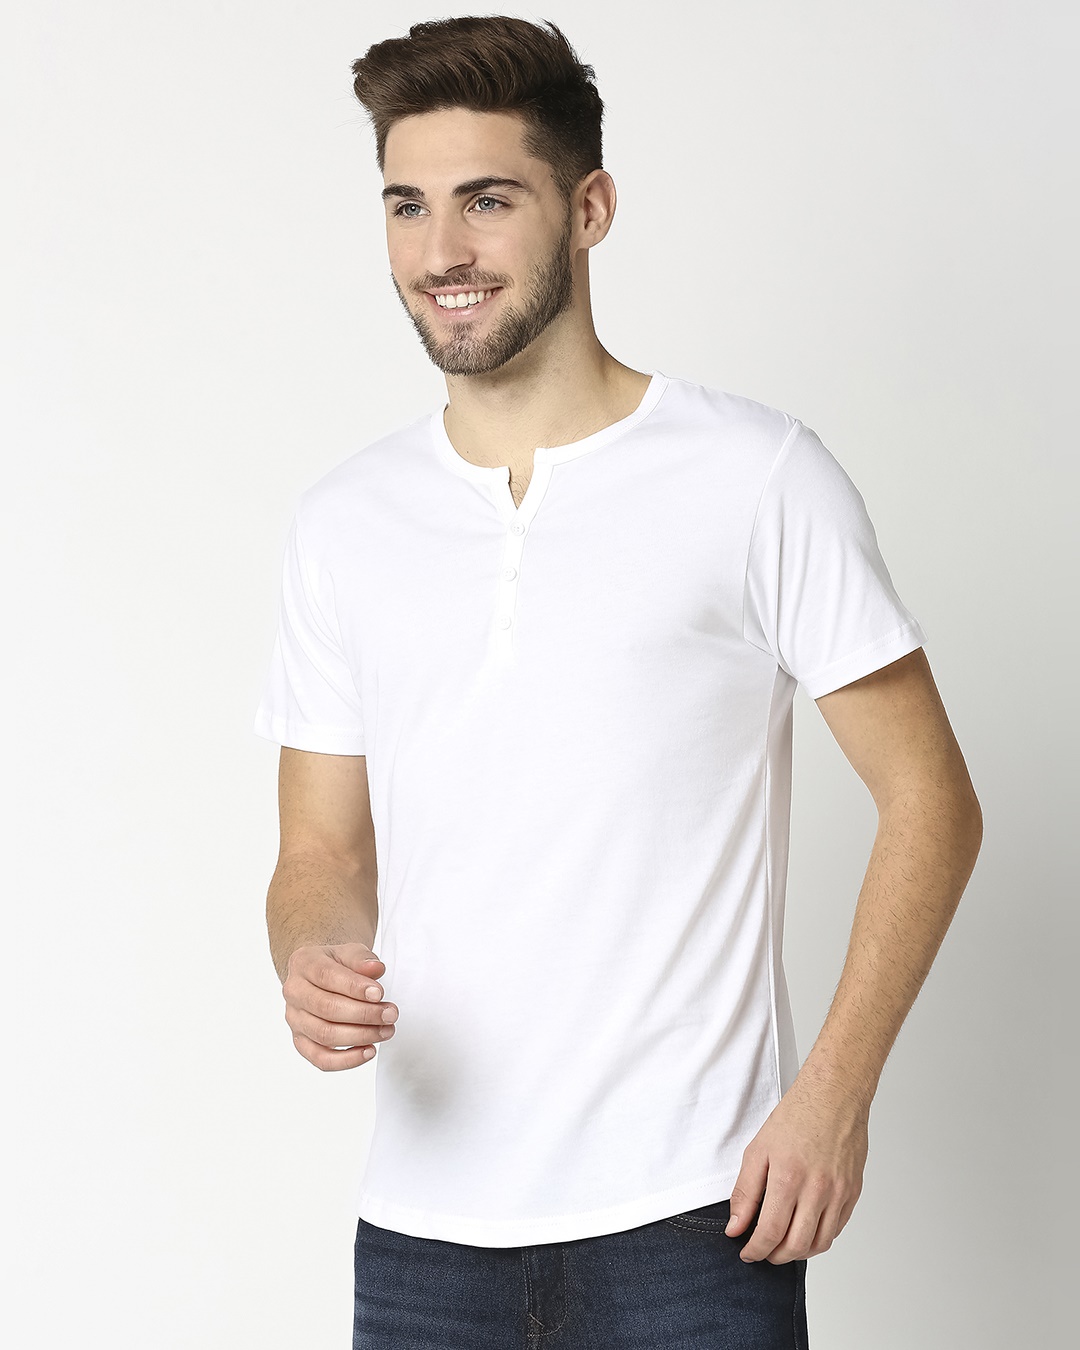 henley shirt white